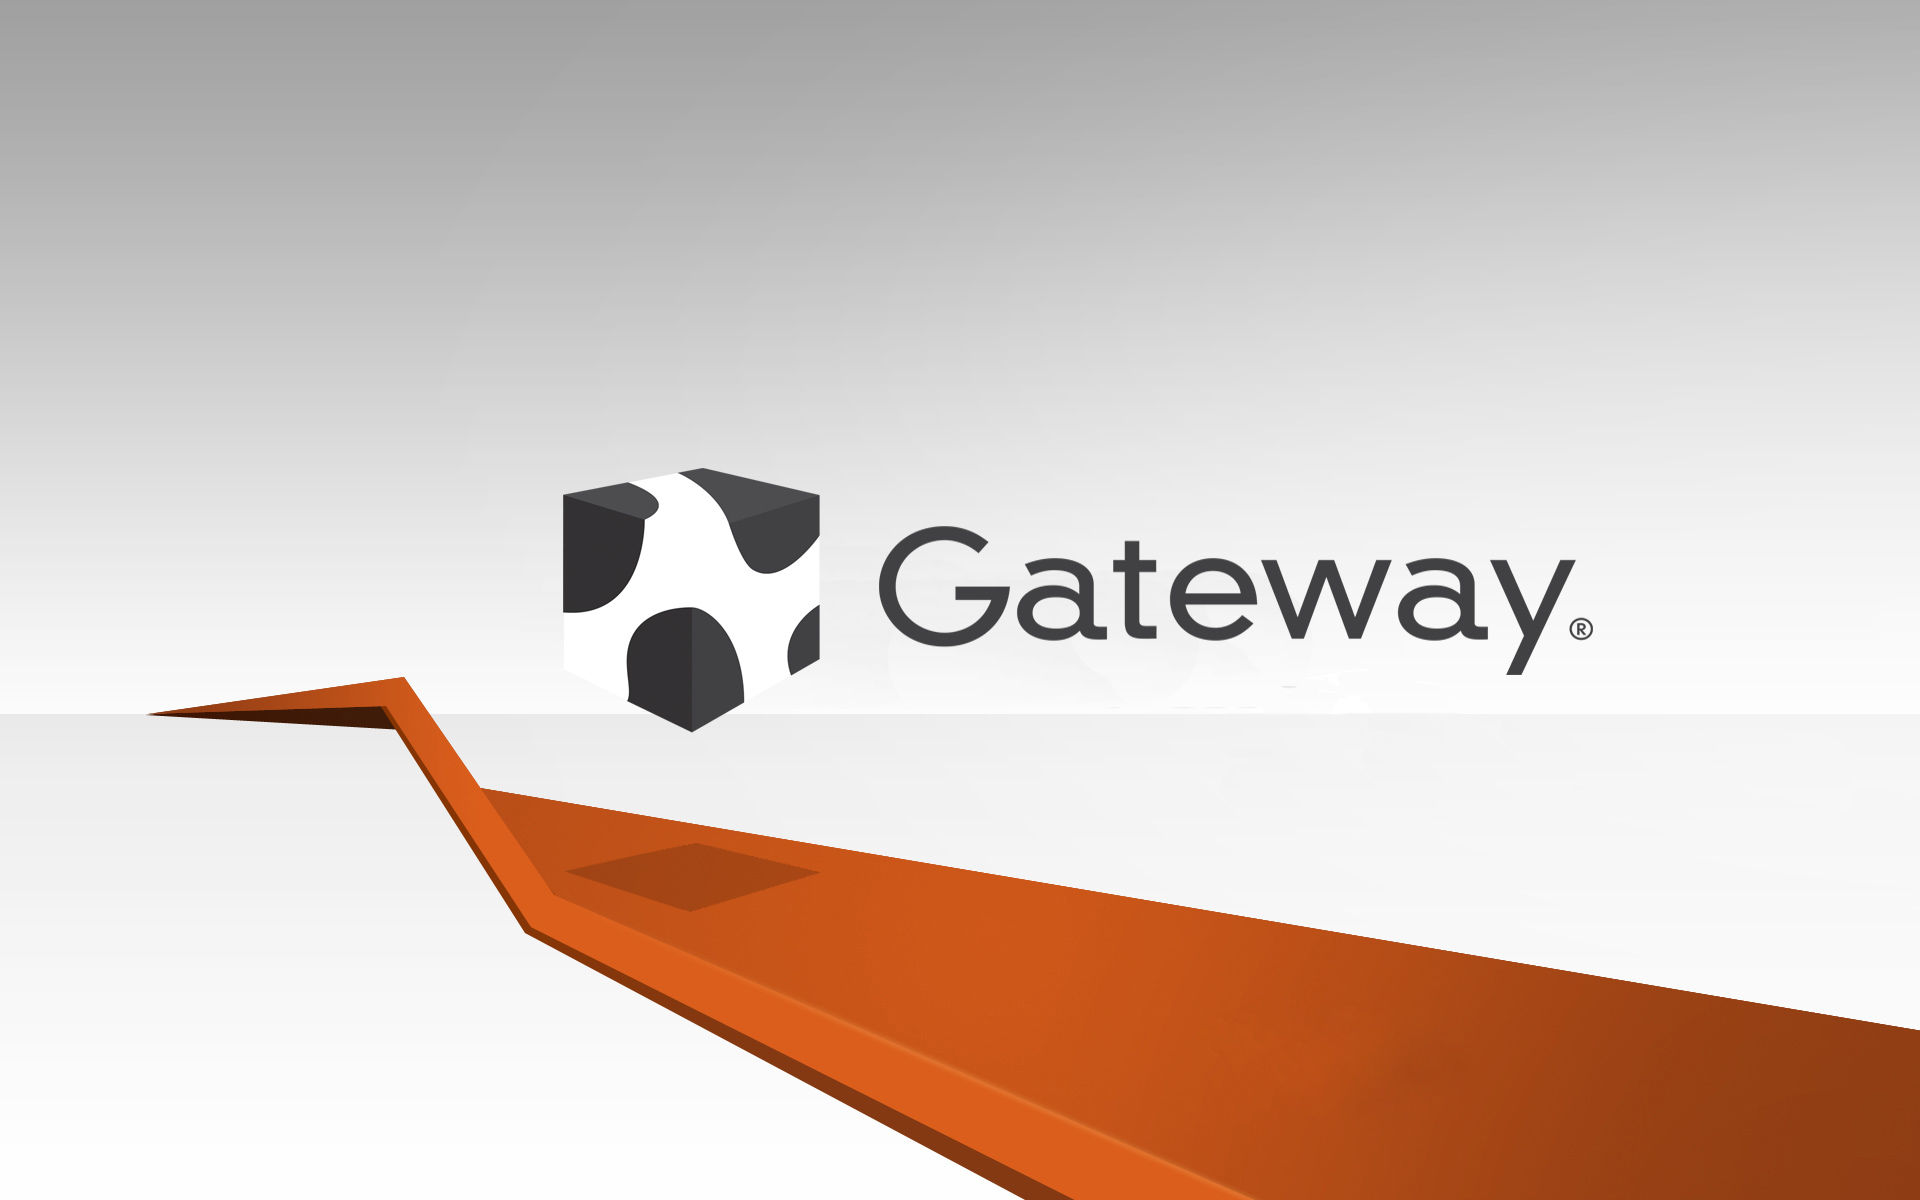 48 Gateway Wallpaper For Windows 8 On Wallpapersafari